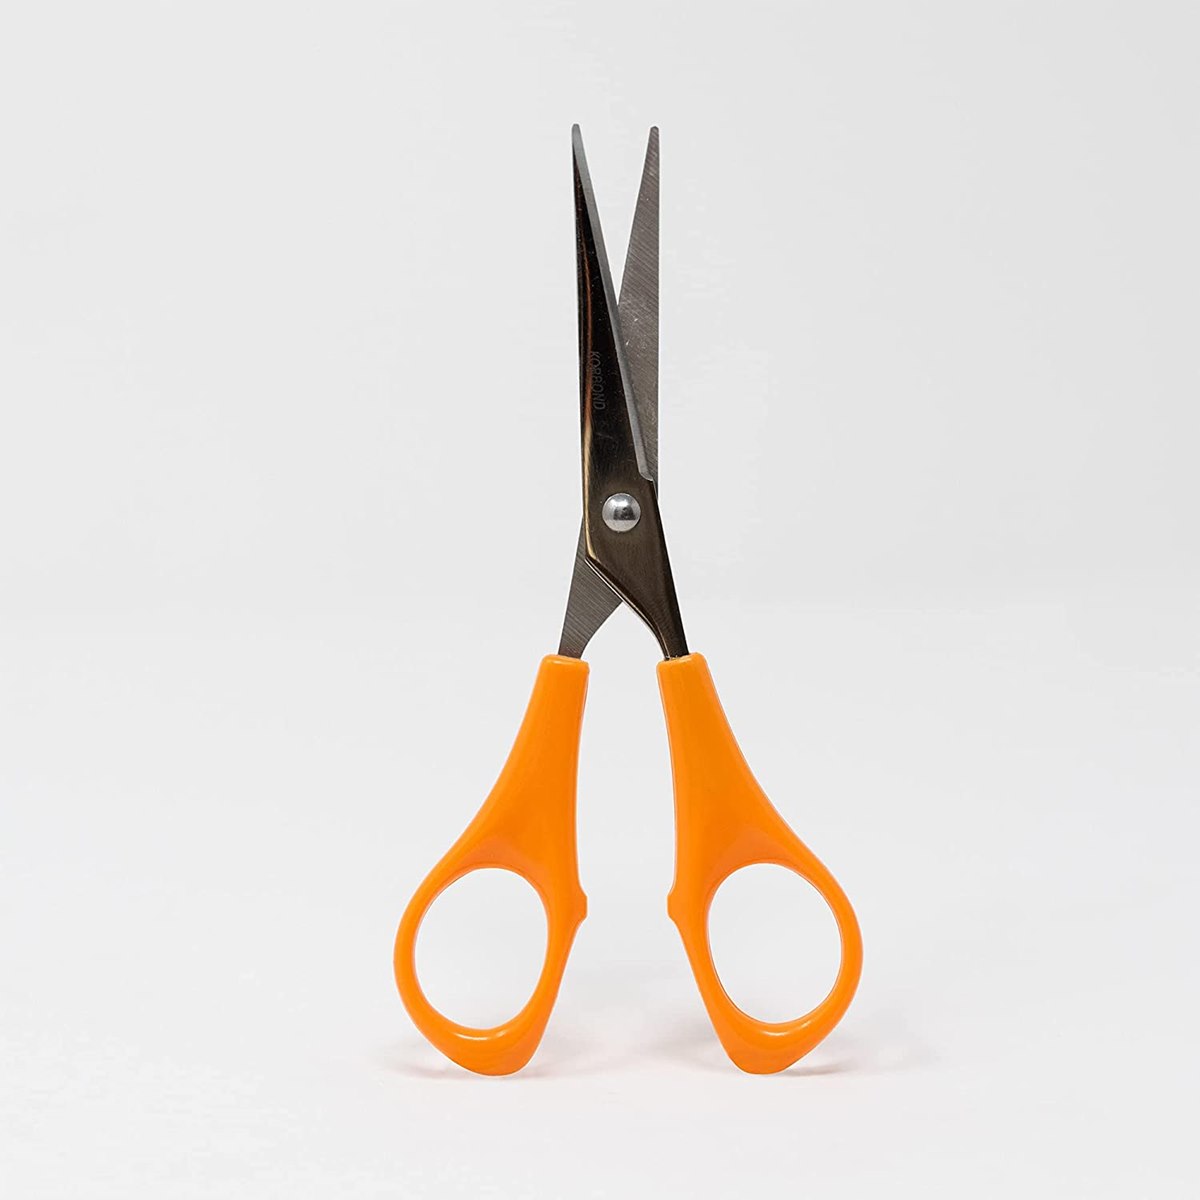 Korbond 5 inch General Purpose Scissors